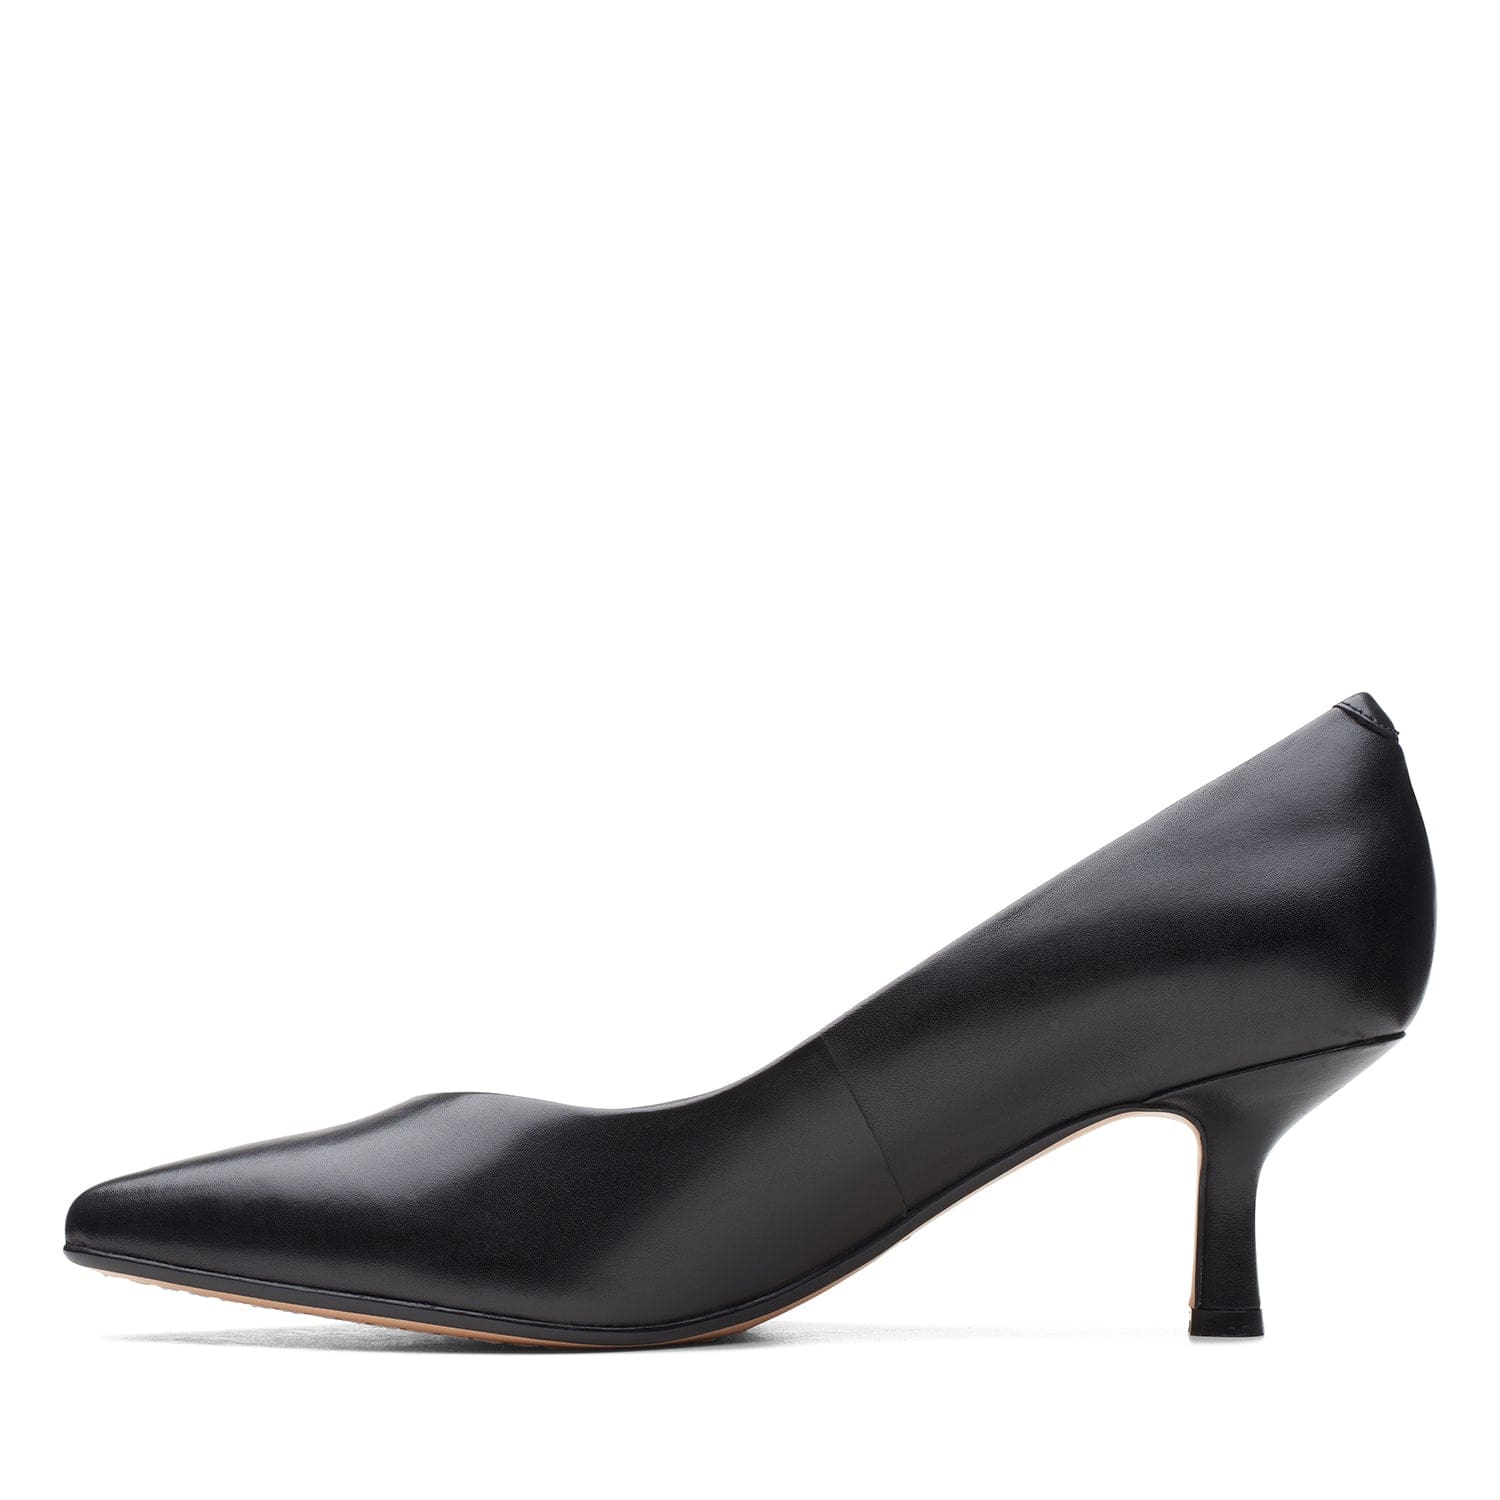 Clarks Violet55 Court Shoes - Black Leather - 261615334 - D Width (Standard Fit)